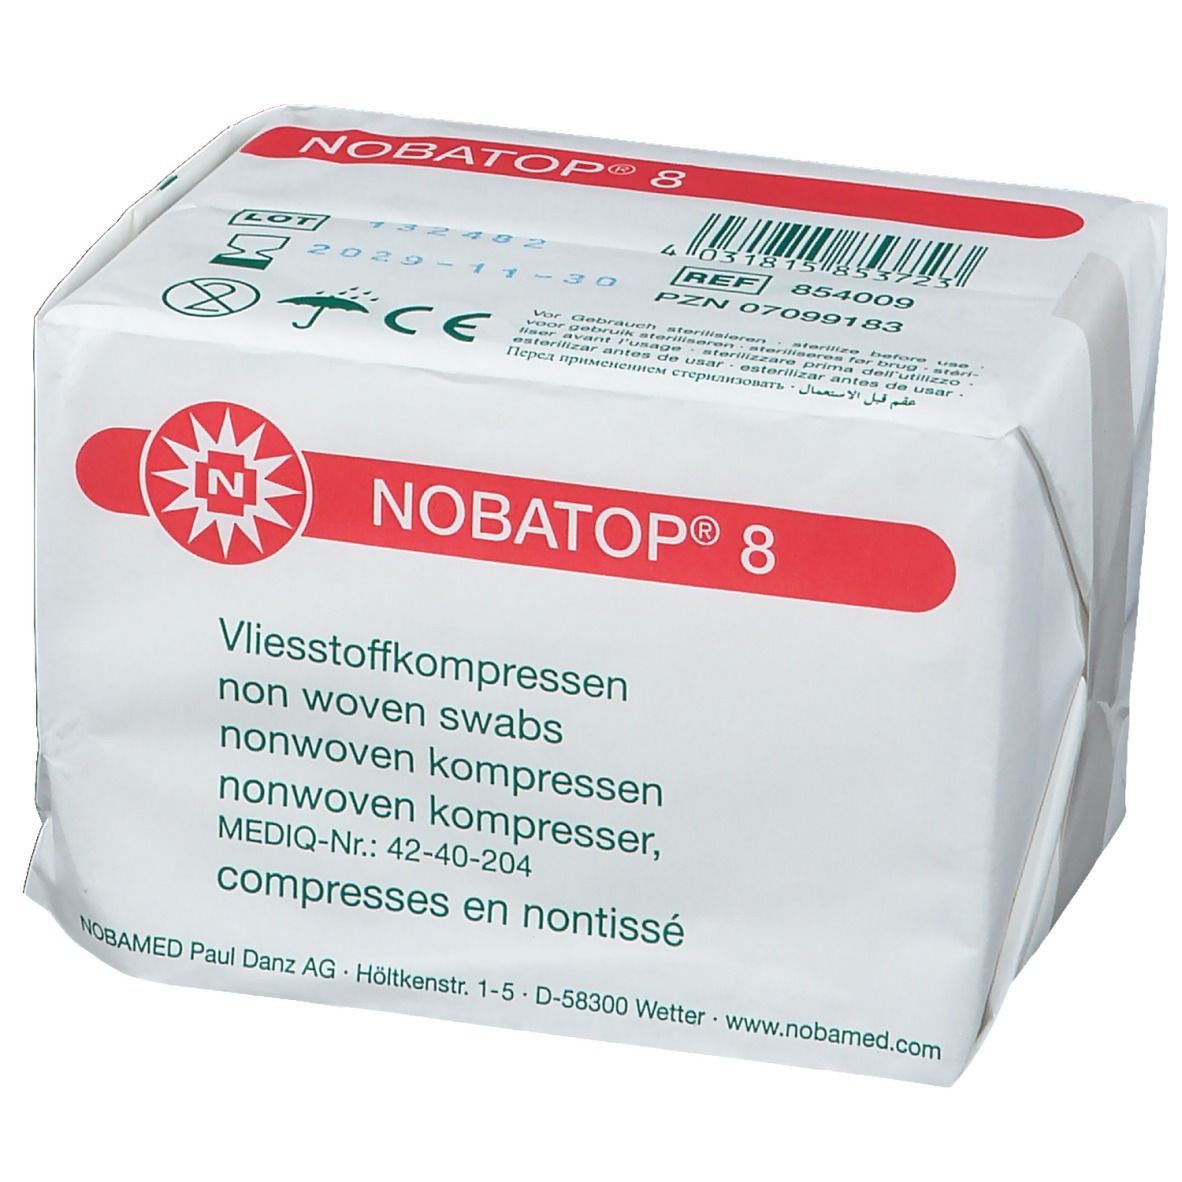 NOBATOP® 8 7,5 x 7,5 cm unsteril